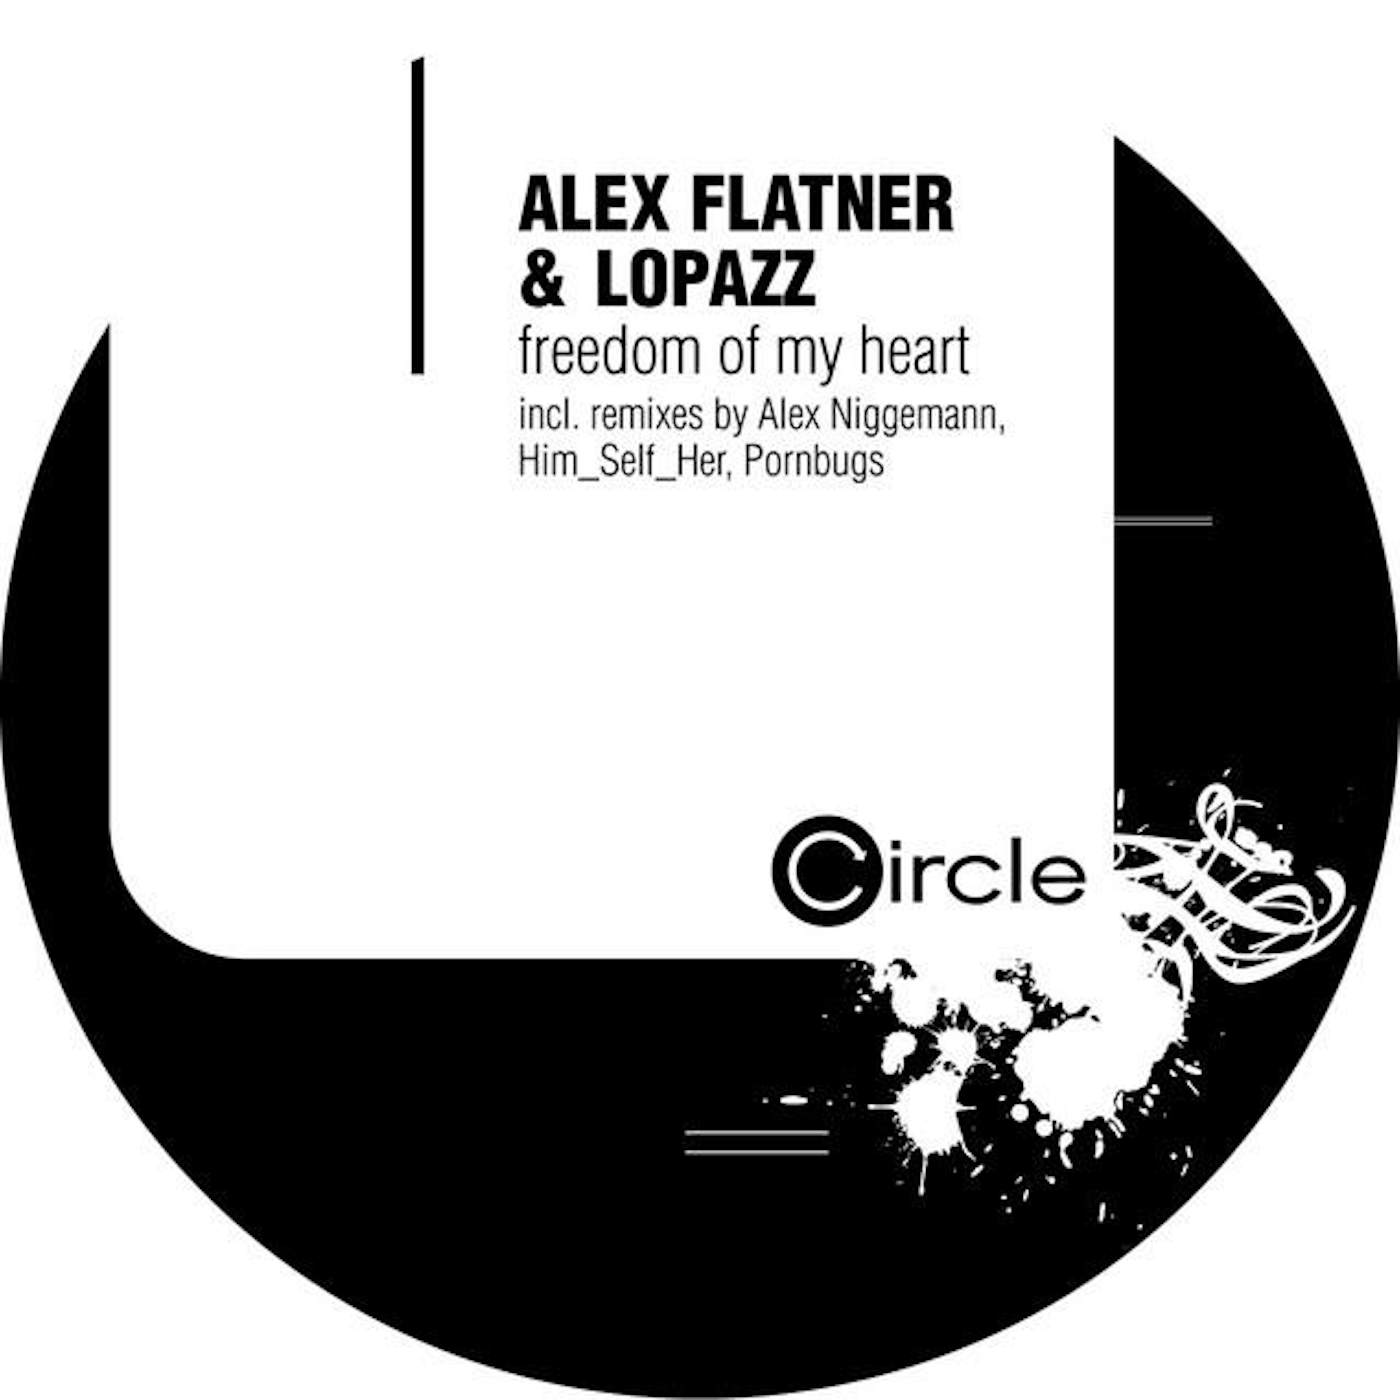 Alex Flatner & Lopazz